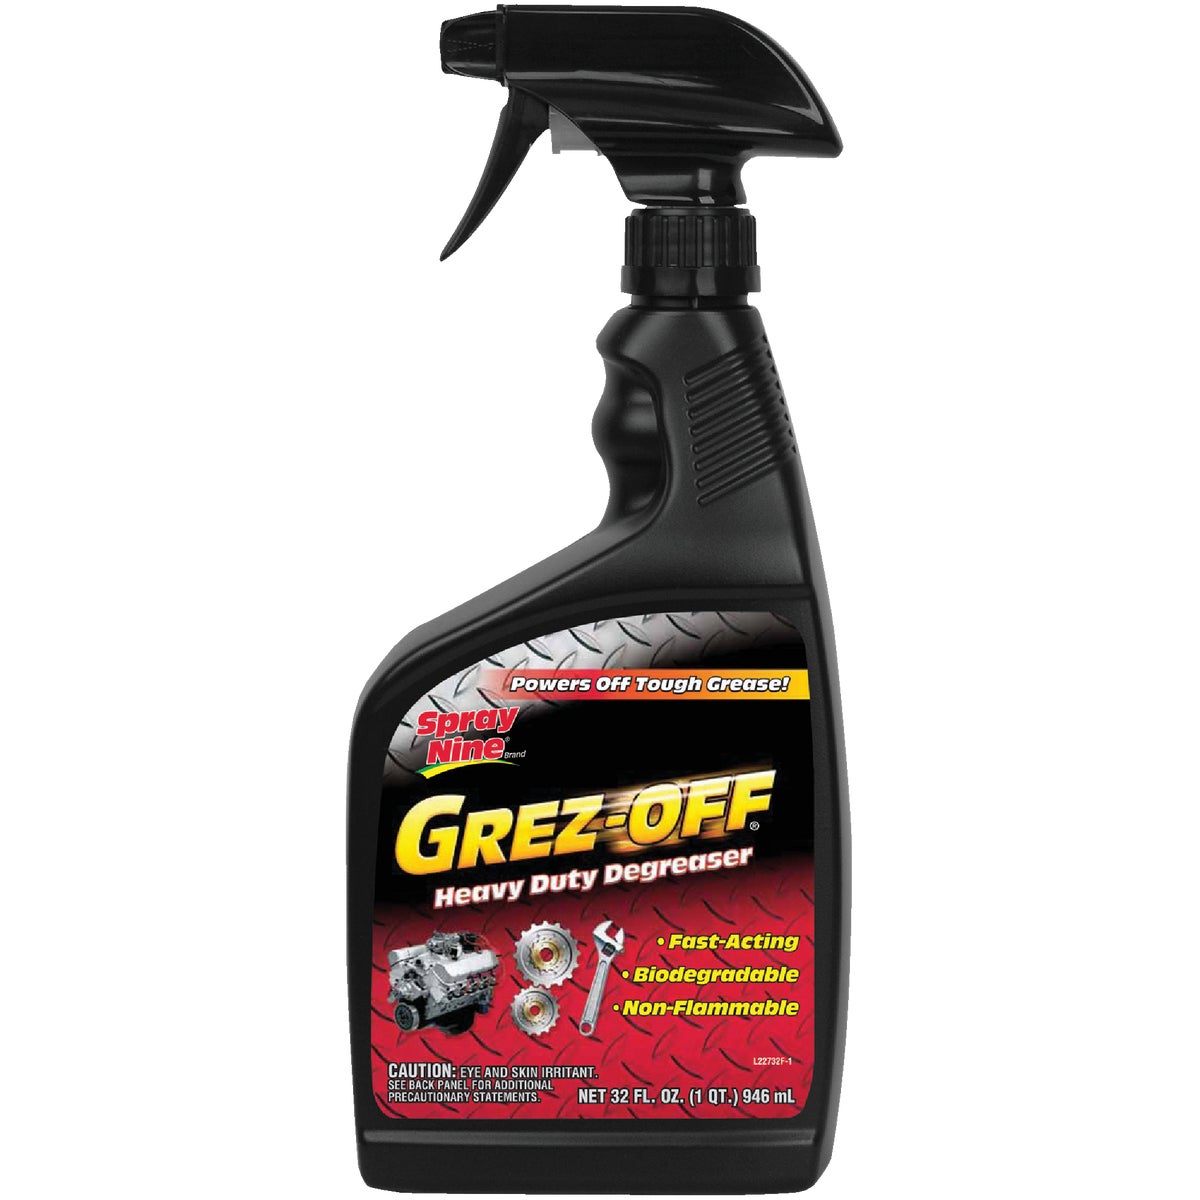 Spray Nine Grez-Off 32 Oz. Trigger Spray Degreaser